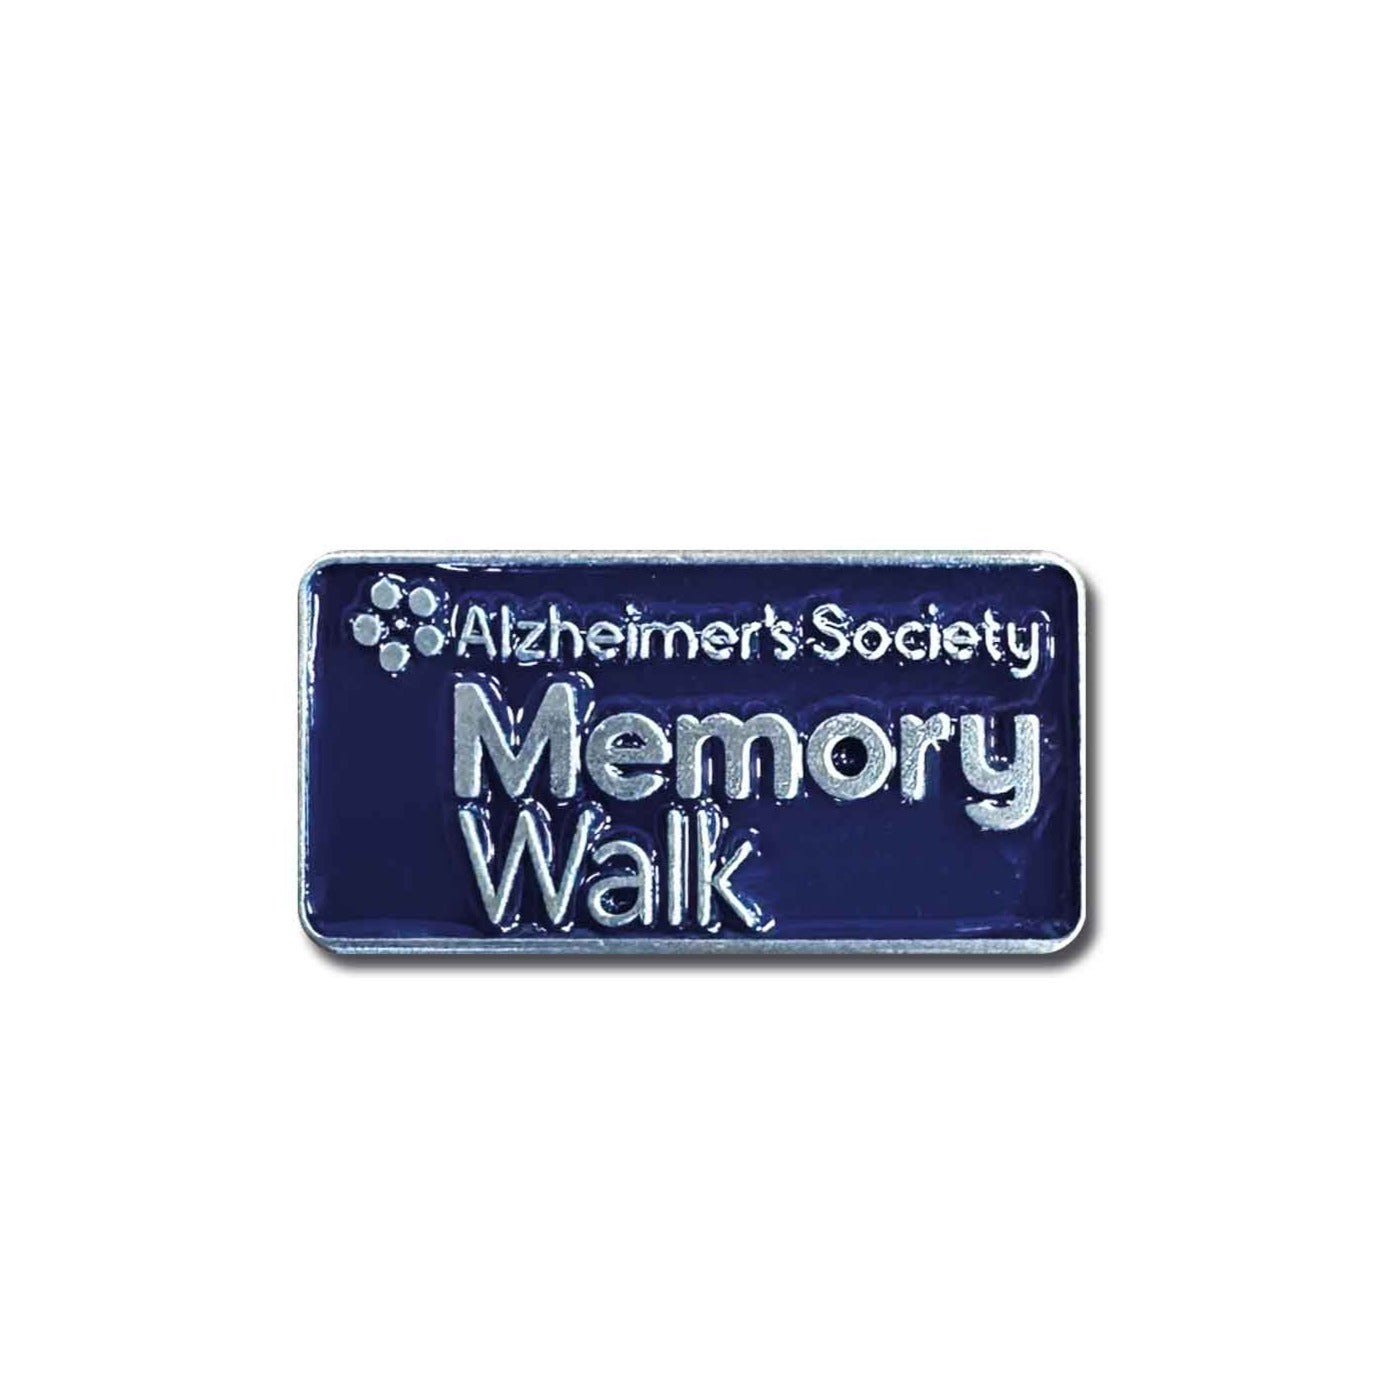 Memory walk words in relief on blue enamelled pin badge